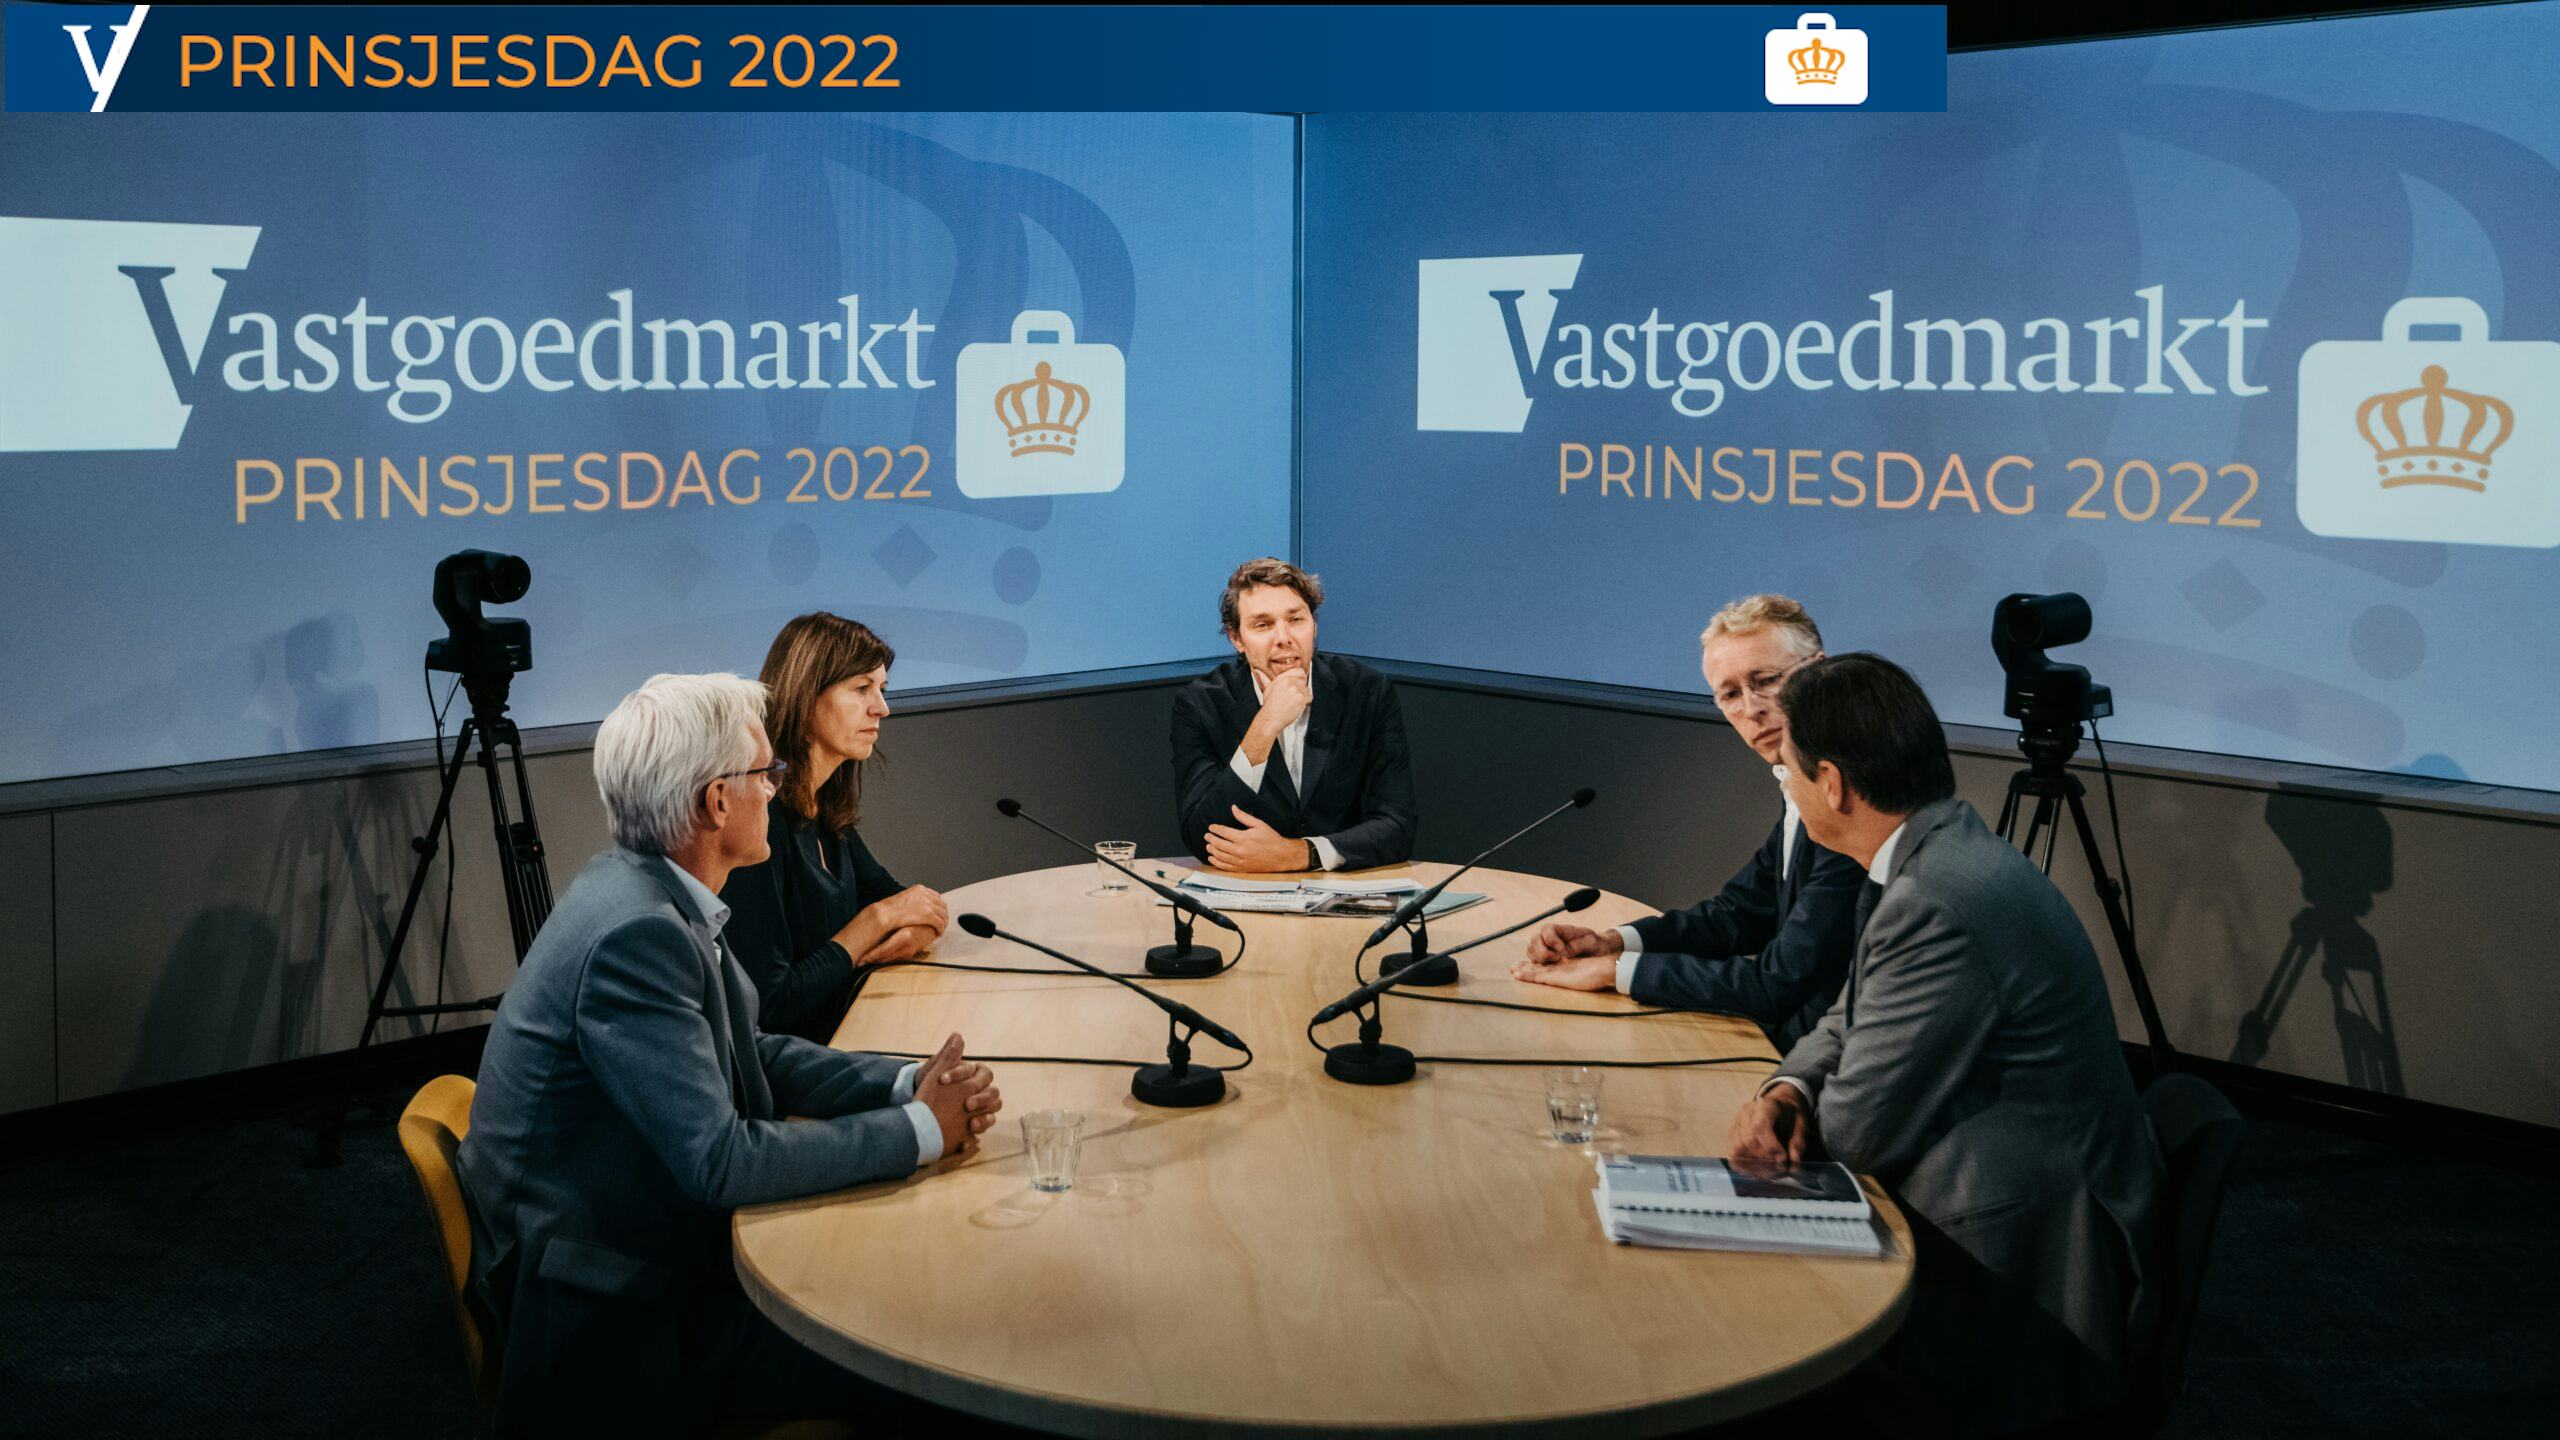 v.l.n.r. Kaj Deana, Marja Appelman, debatleider Servaas van der Laan, Harm Janssen, Bartjan Zoetmulder. Foto: Annick Elzenga